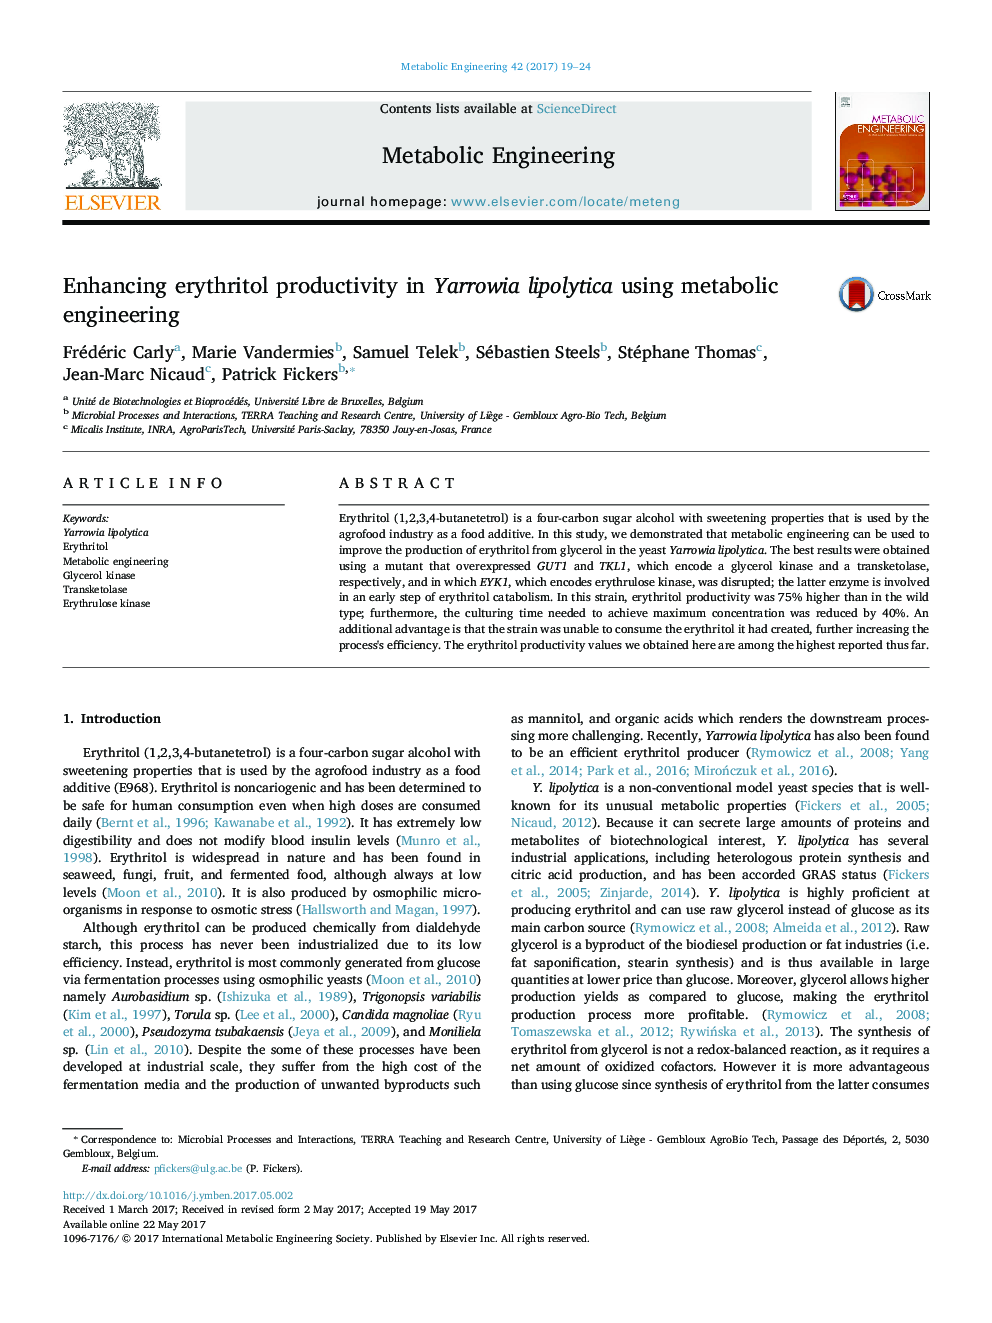 Enhancing erythritol productivity in Yarrowia lipolytica using metabolic engineering